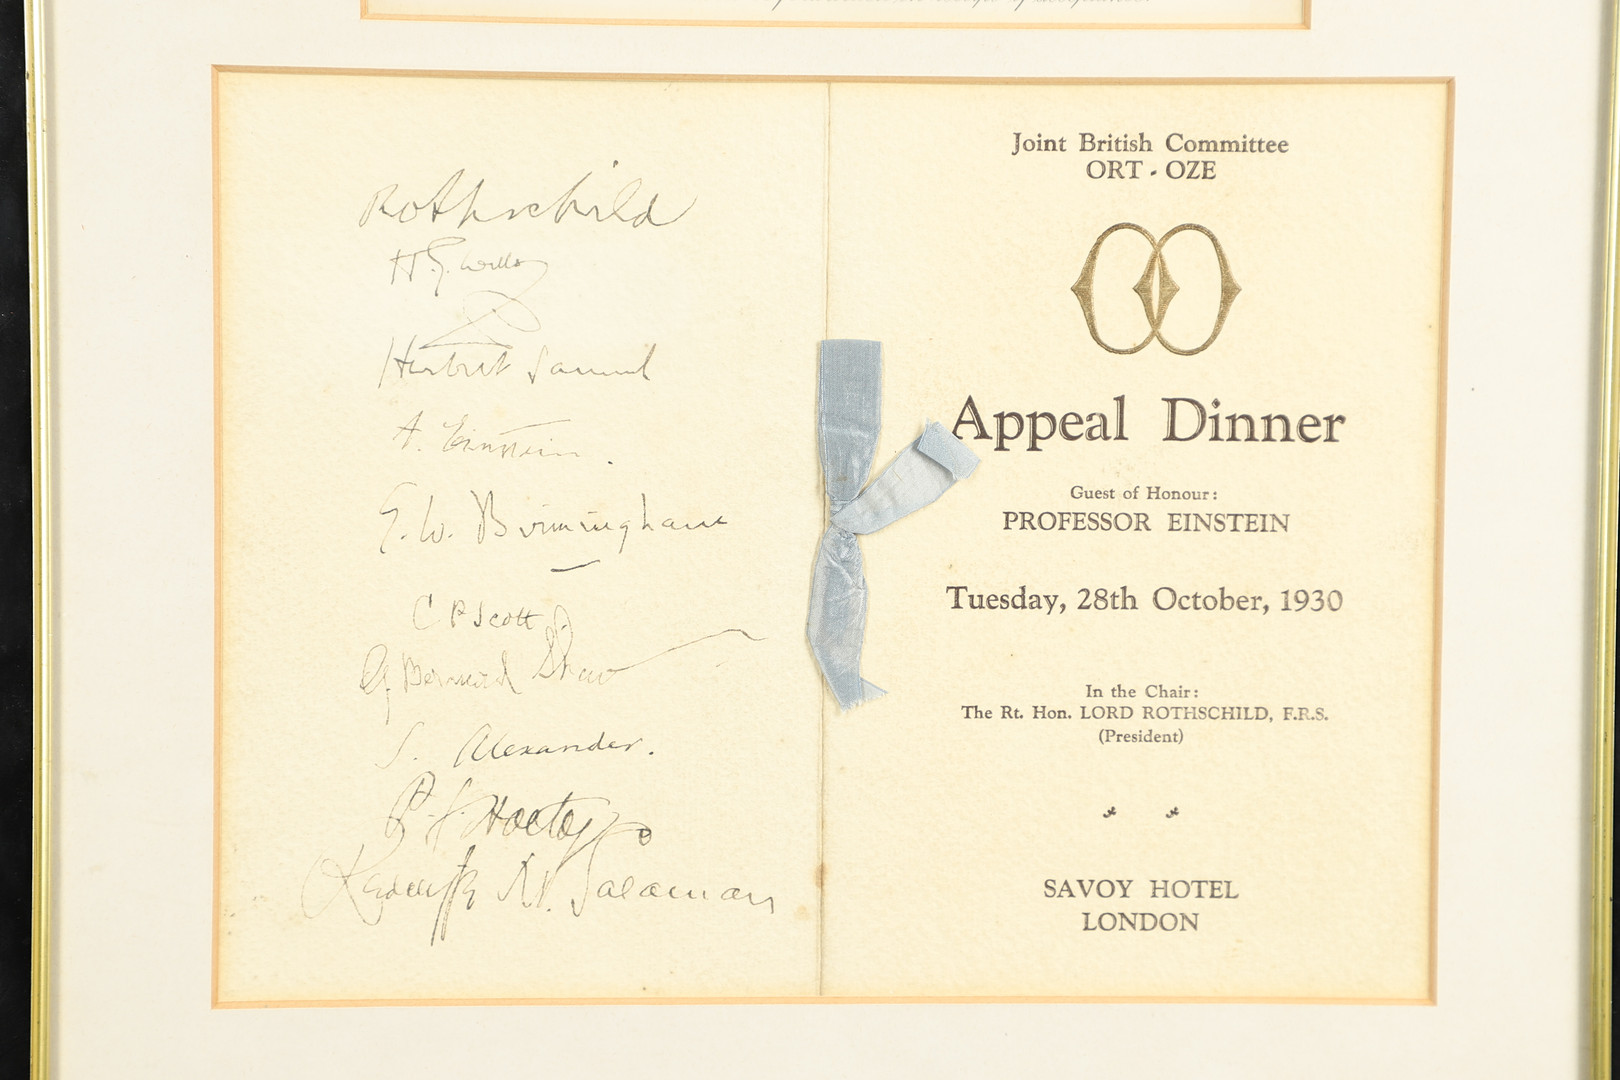 A charity dinner menu signed by Albert Einstein